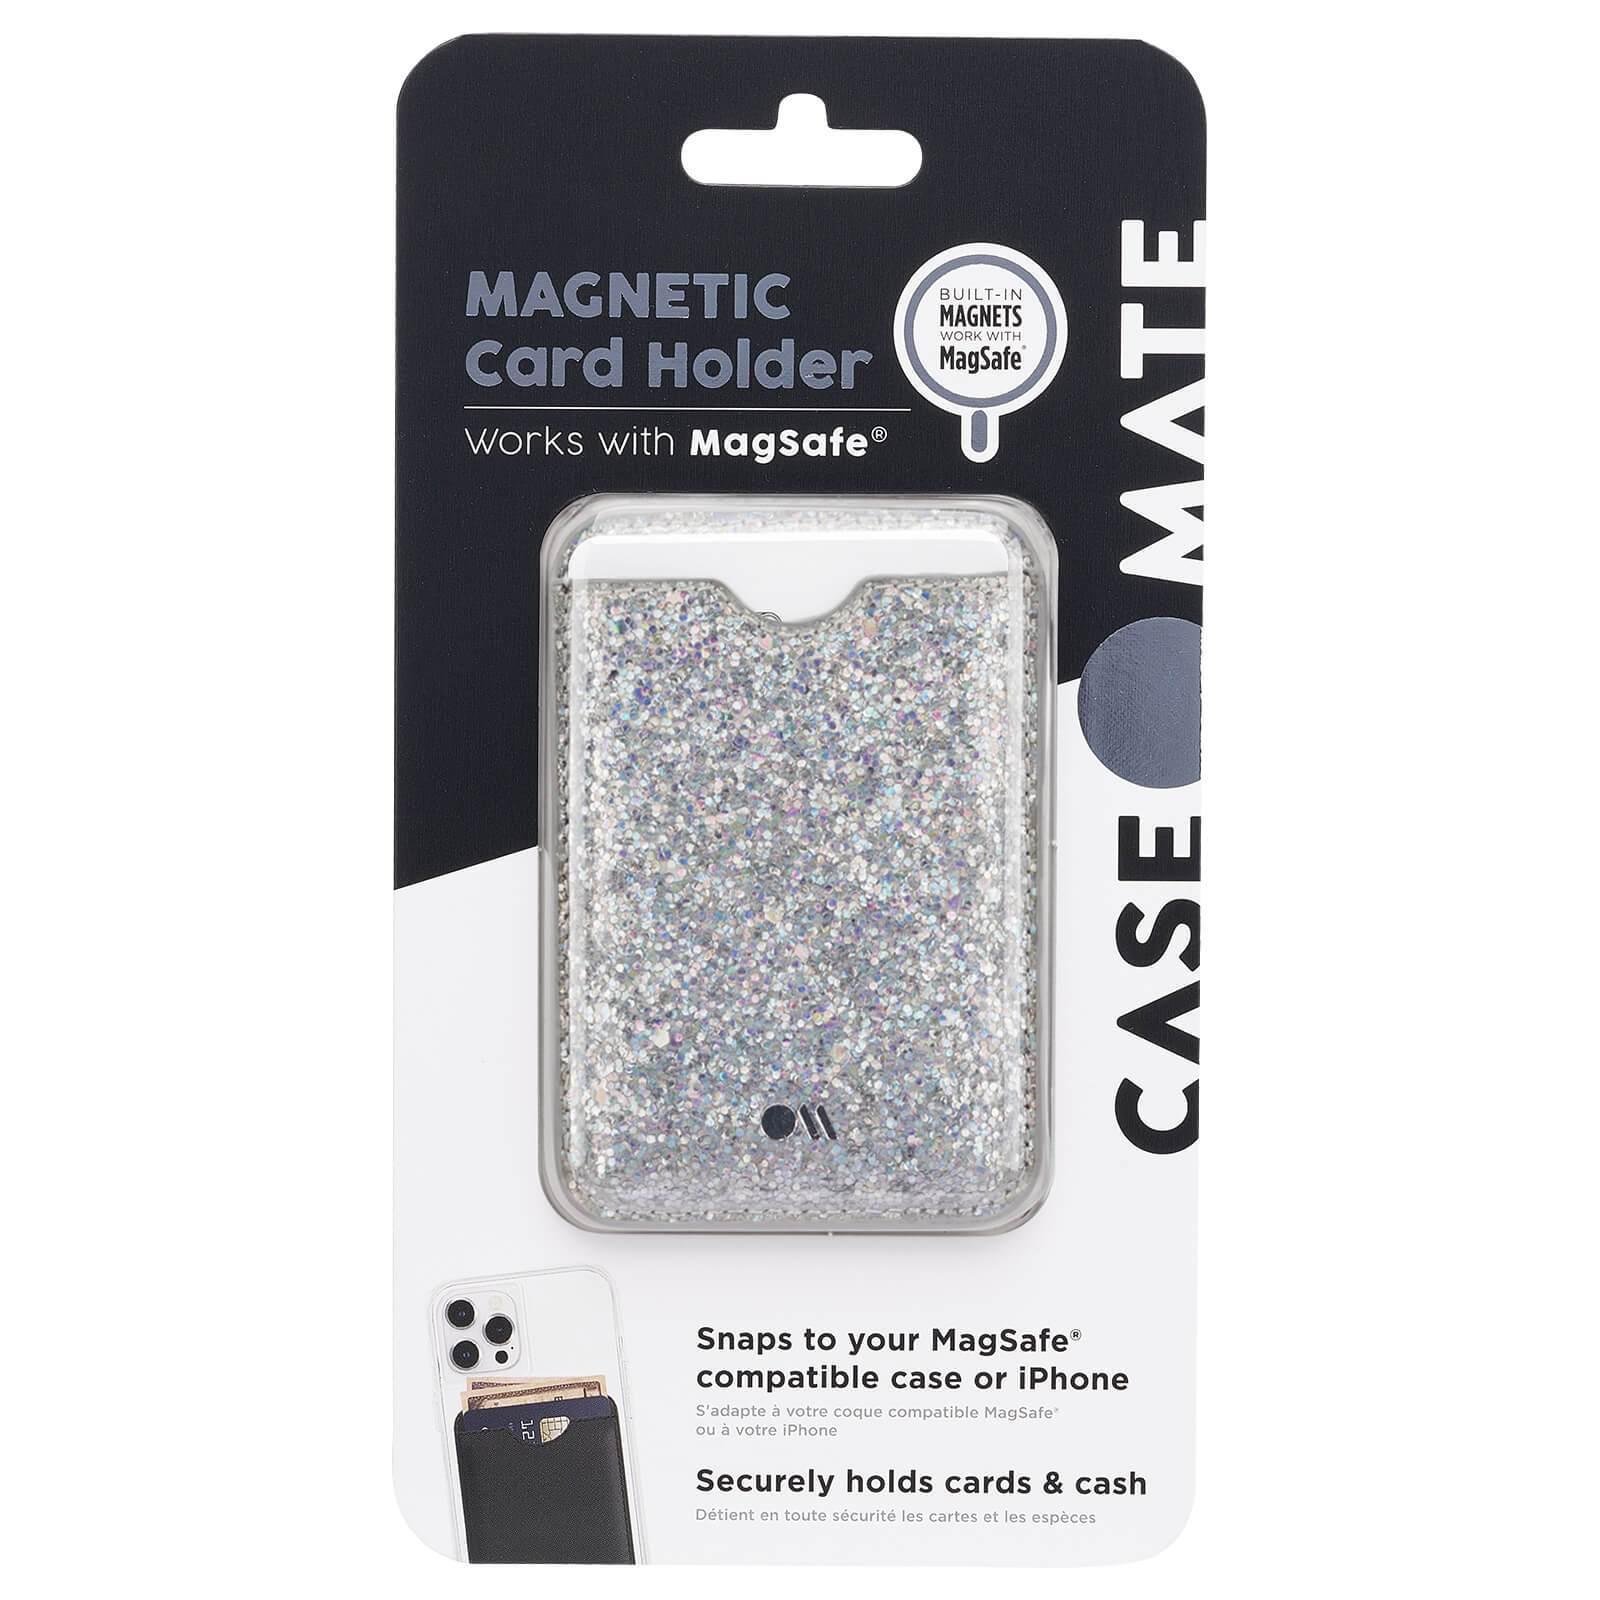 Magnetic Card Holder works with MagSafe. Built in Magnets work with MagSafe. Snaps to your MagSafe compatible case or iPhone. Securely holds cards & cash. color::Sparkle